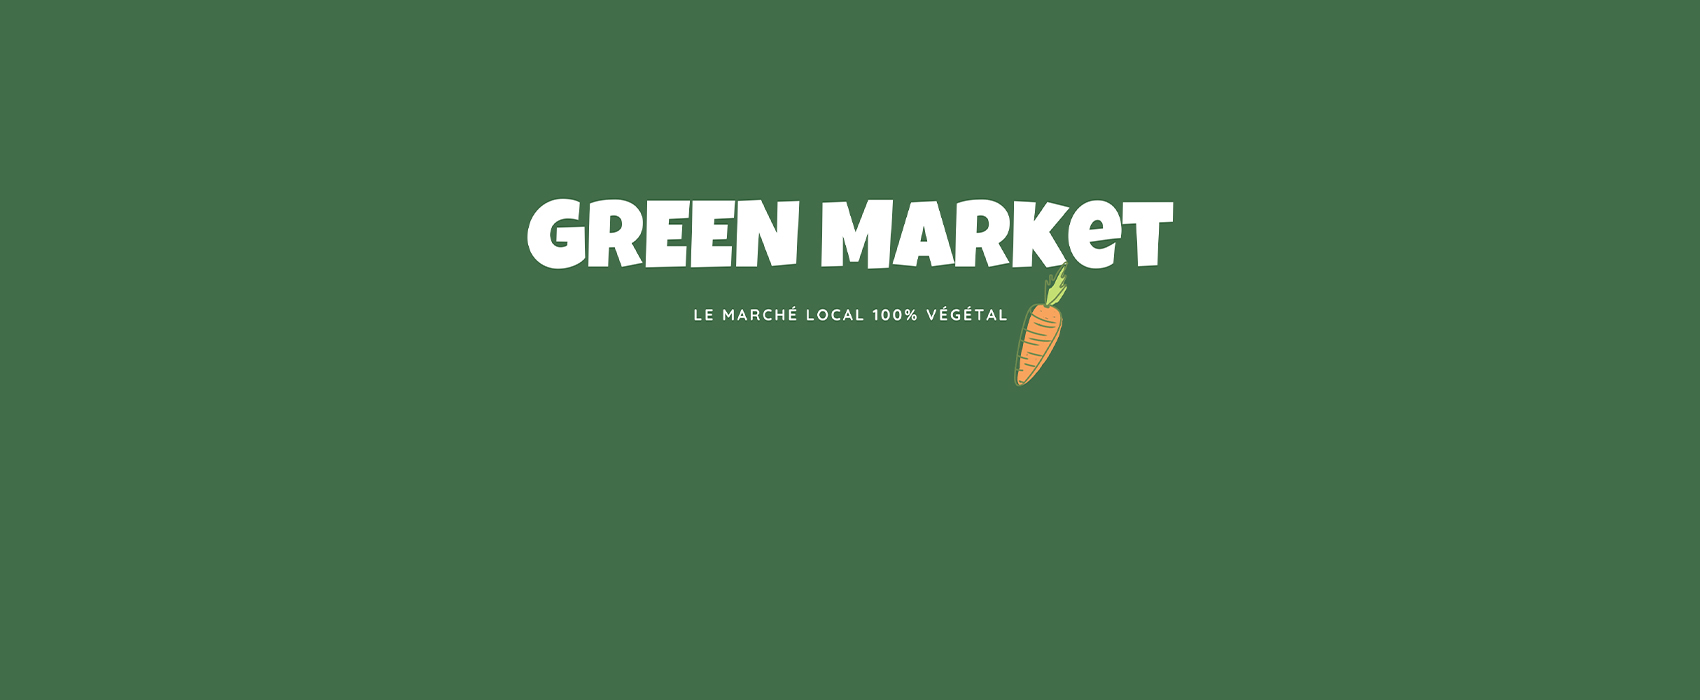 Green Market merignac